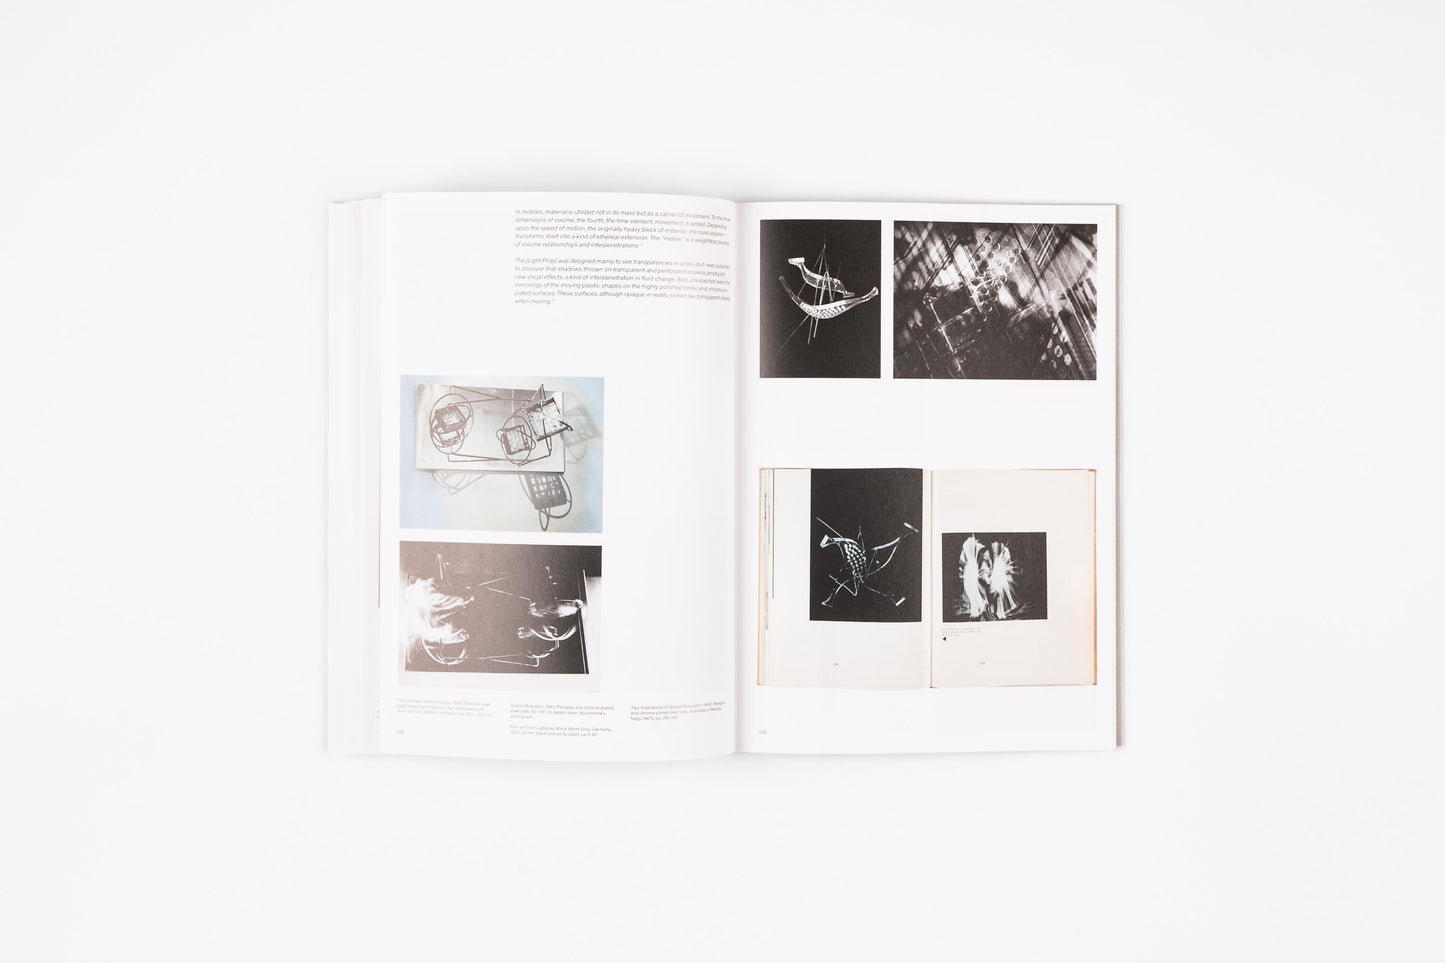 Sensing the Future: Moholy-Nagy, Media and the Arts